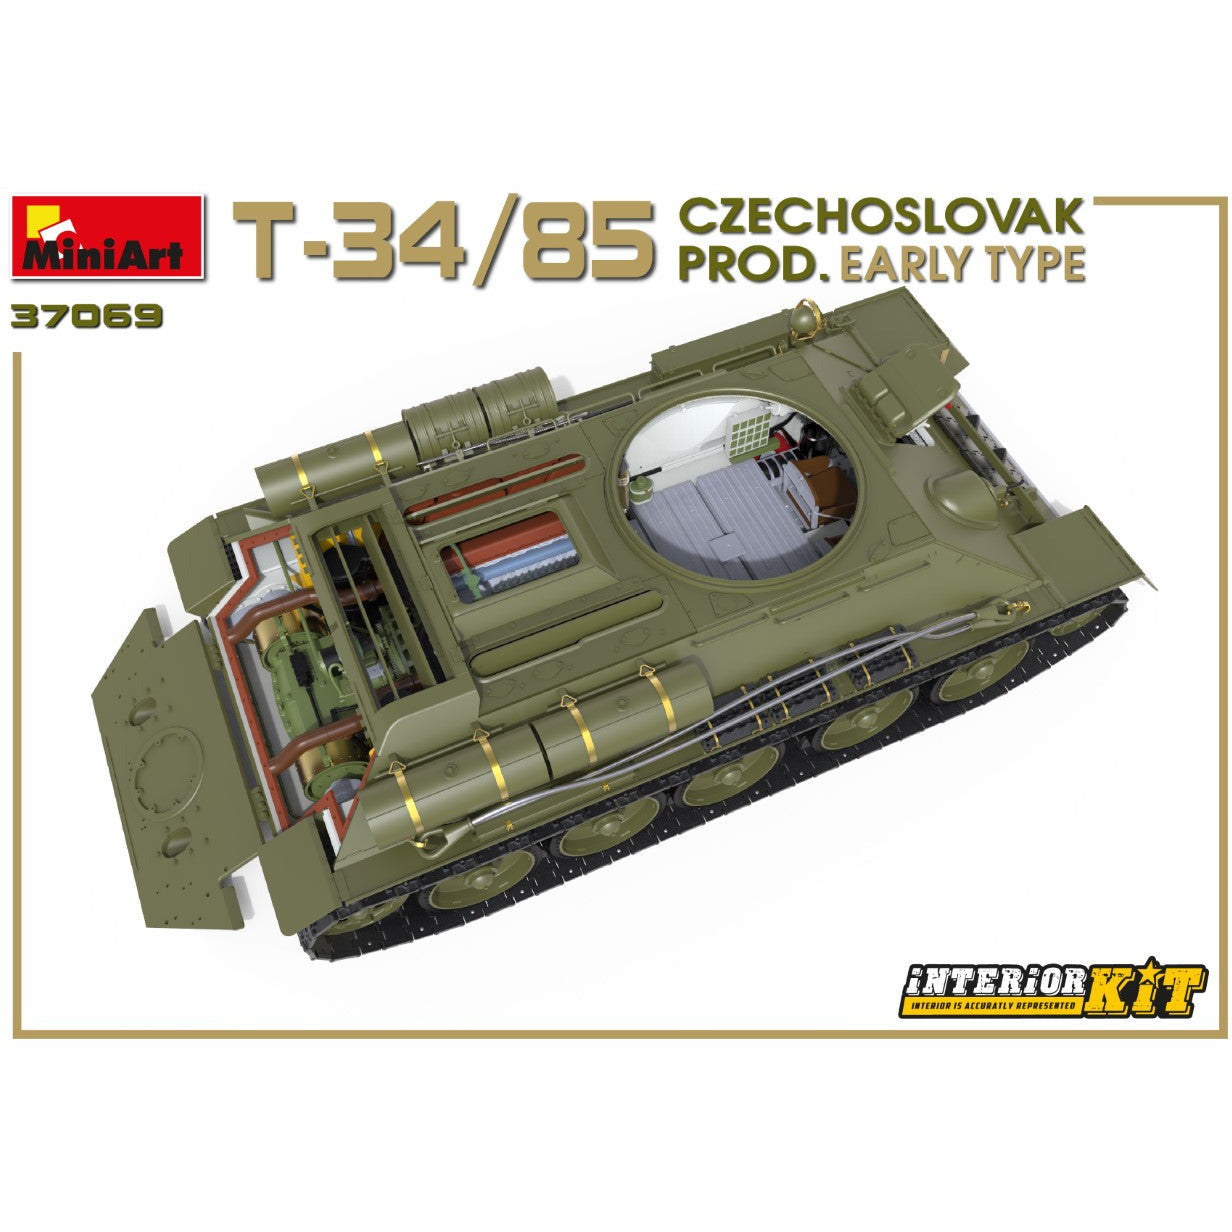 MINIART 1/35 T-34/85 Czechoslovak Prod Early Type Interior Kit